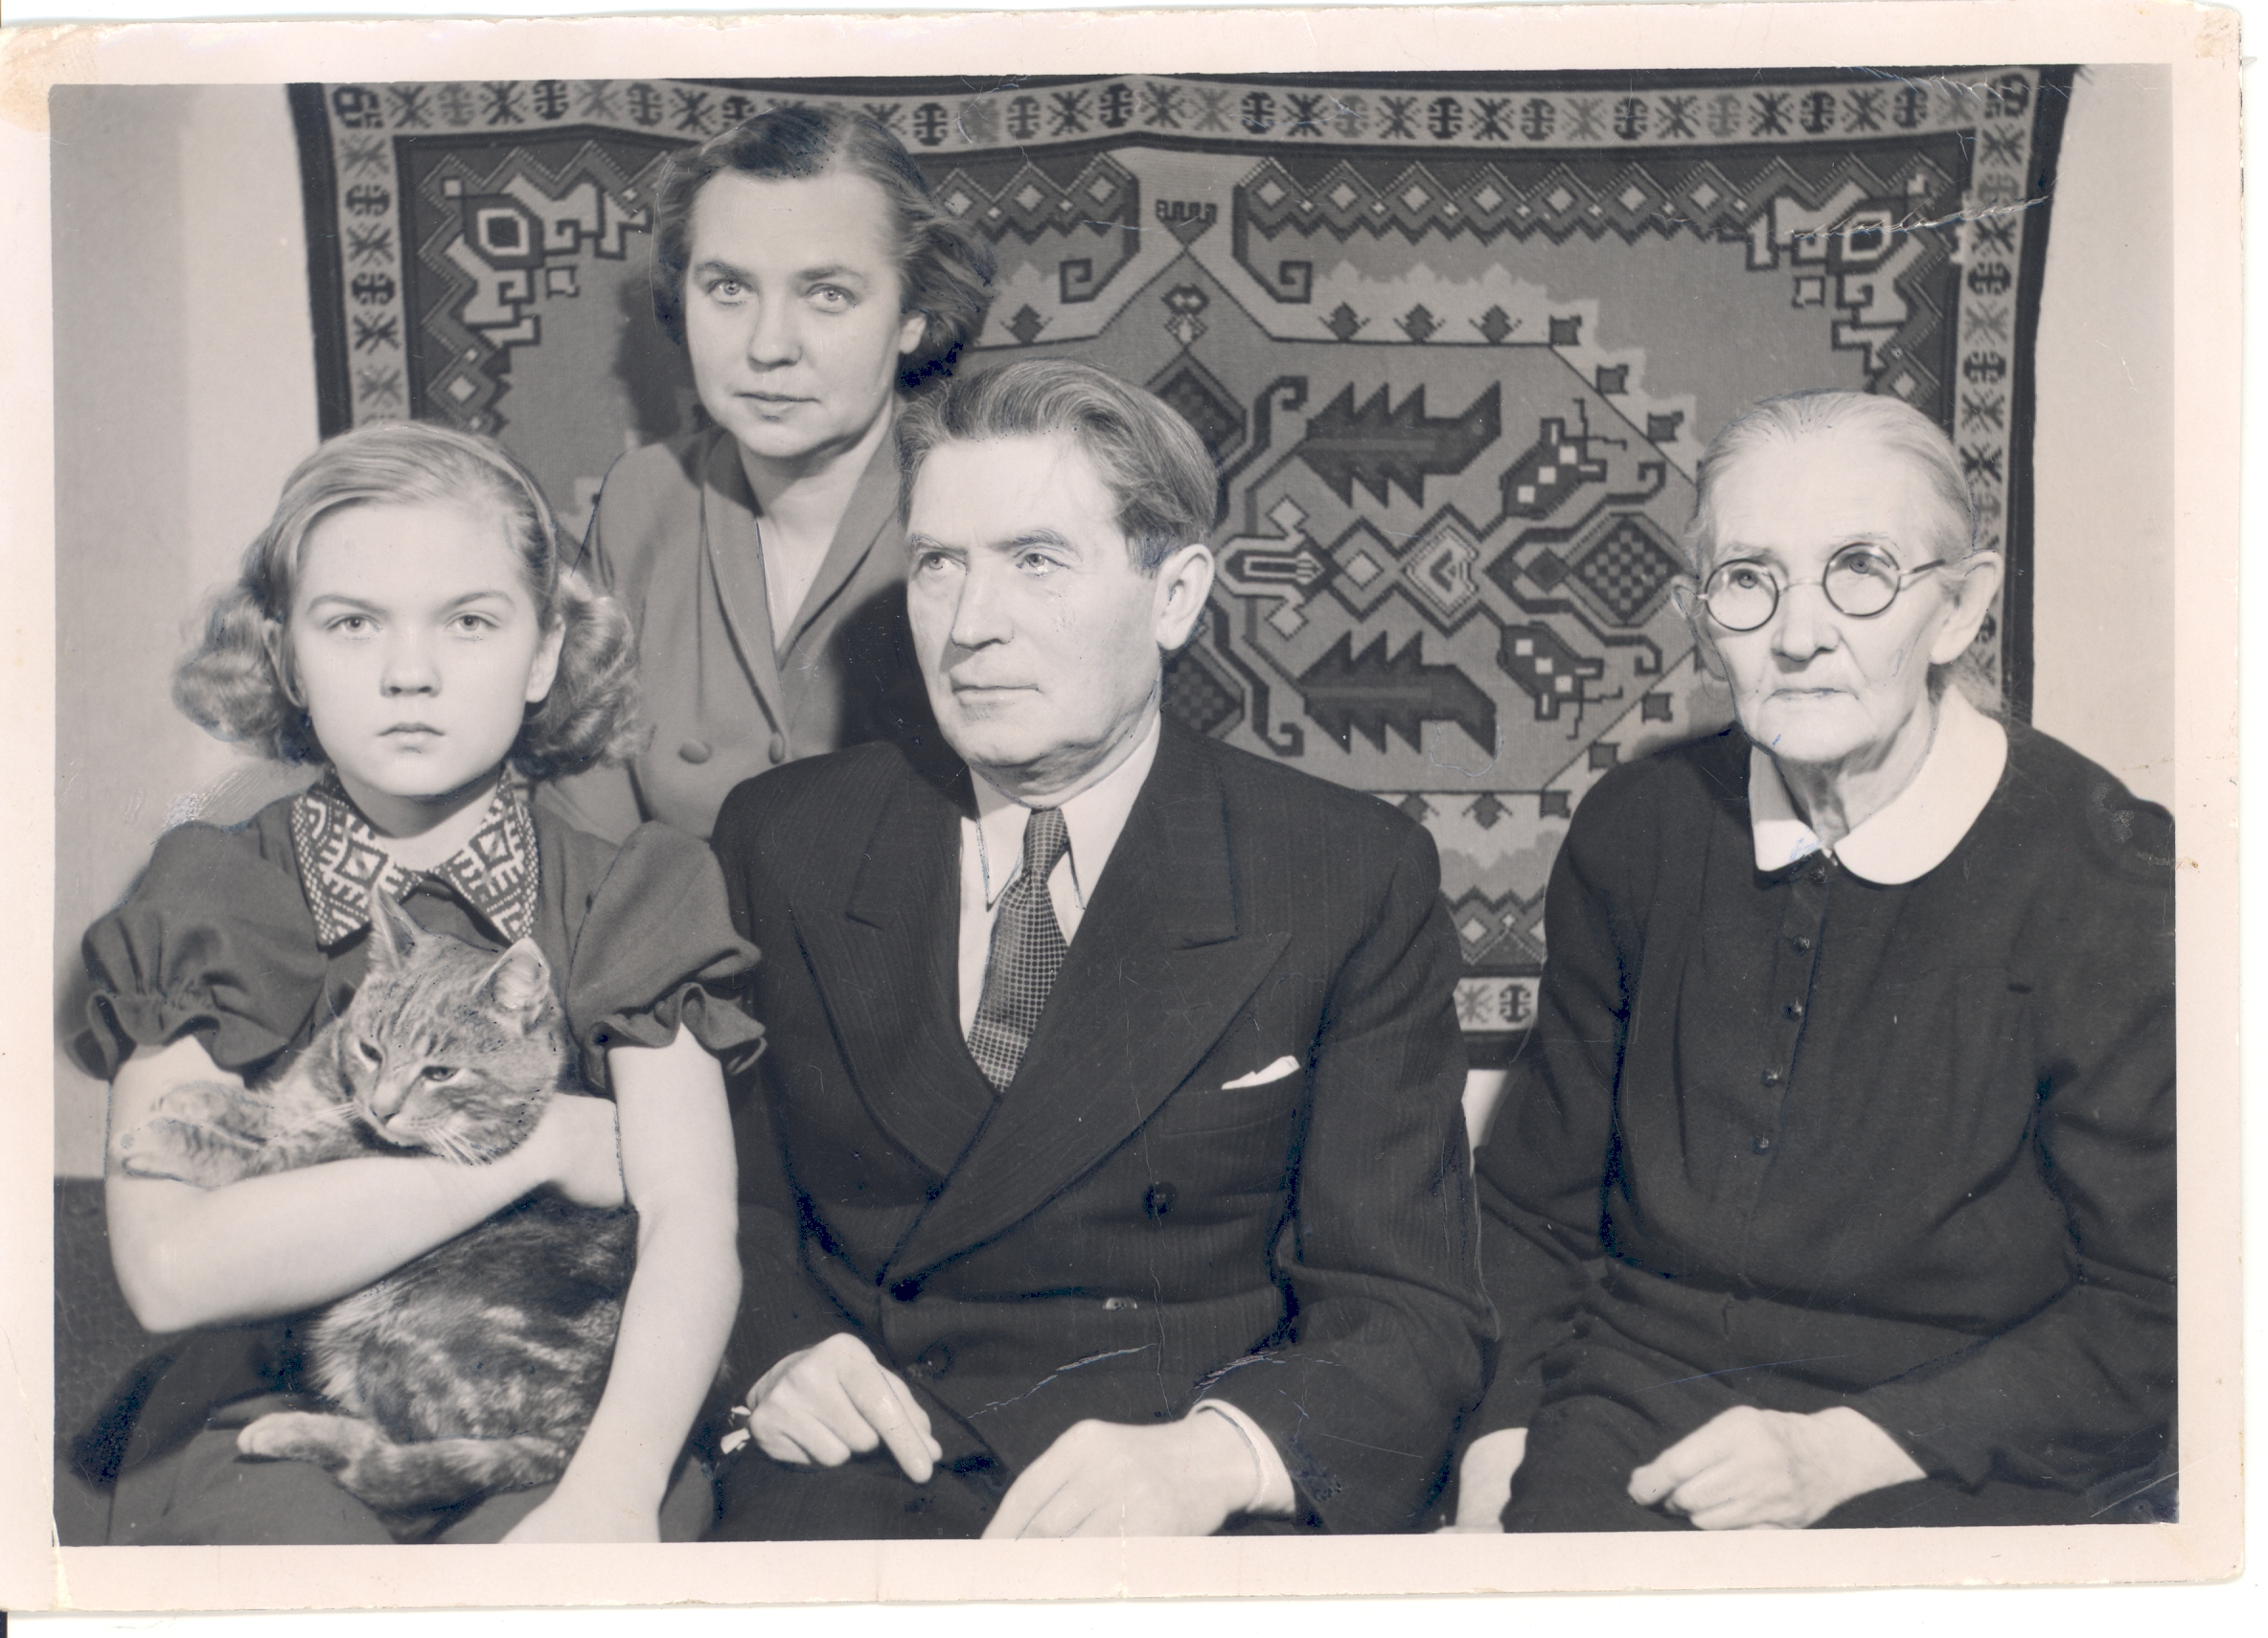 The 70th birthday of Johannes Aaviku in 1950. VAS. : Silvia Aavik, Aleksandra Aavik, Johannes Aavik, Anna Narva